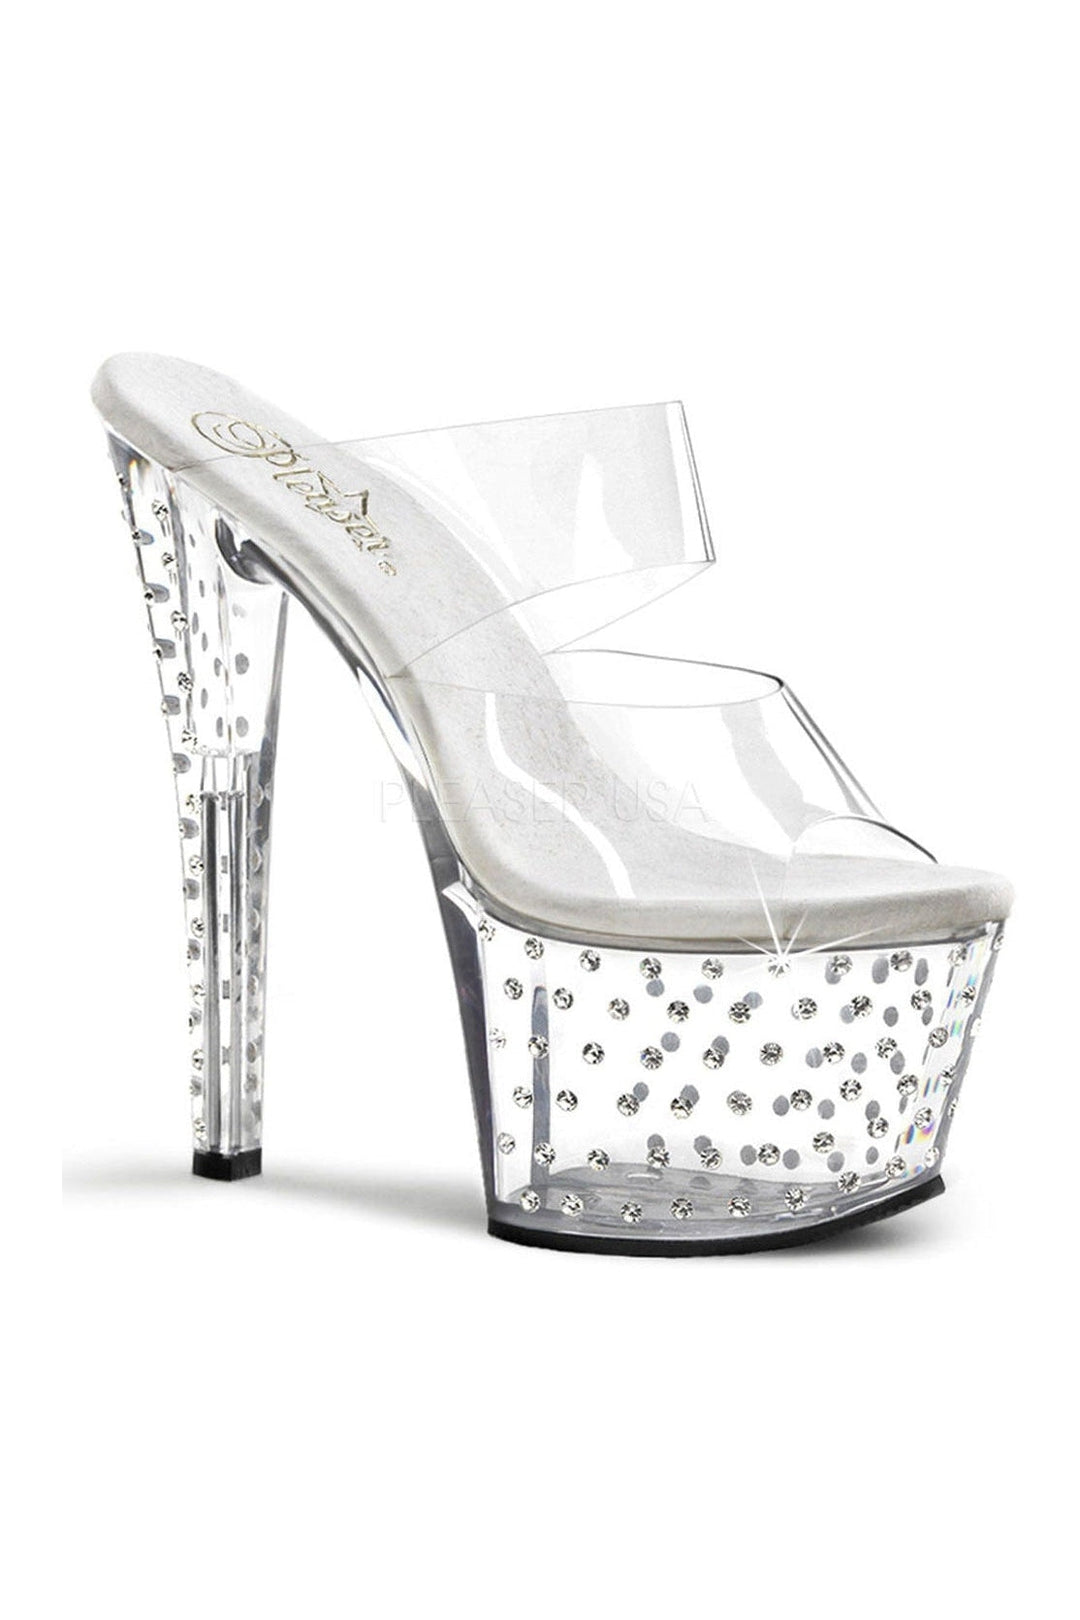 Pleaser Clear Slides Platform Stripper Shoes | Buy at Sexyshoes.com